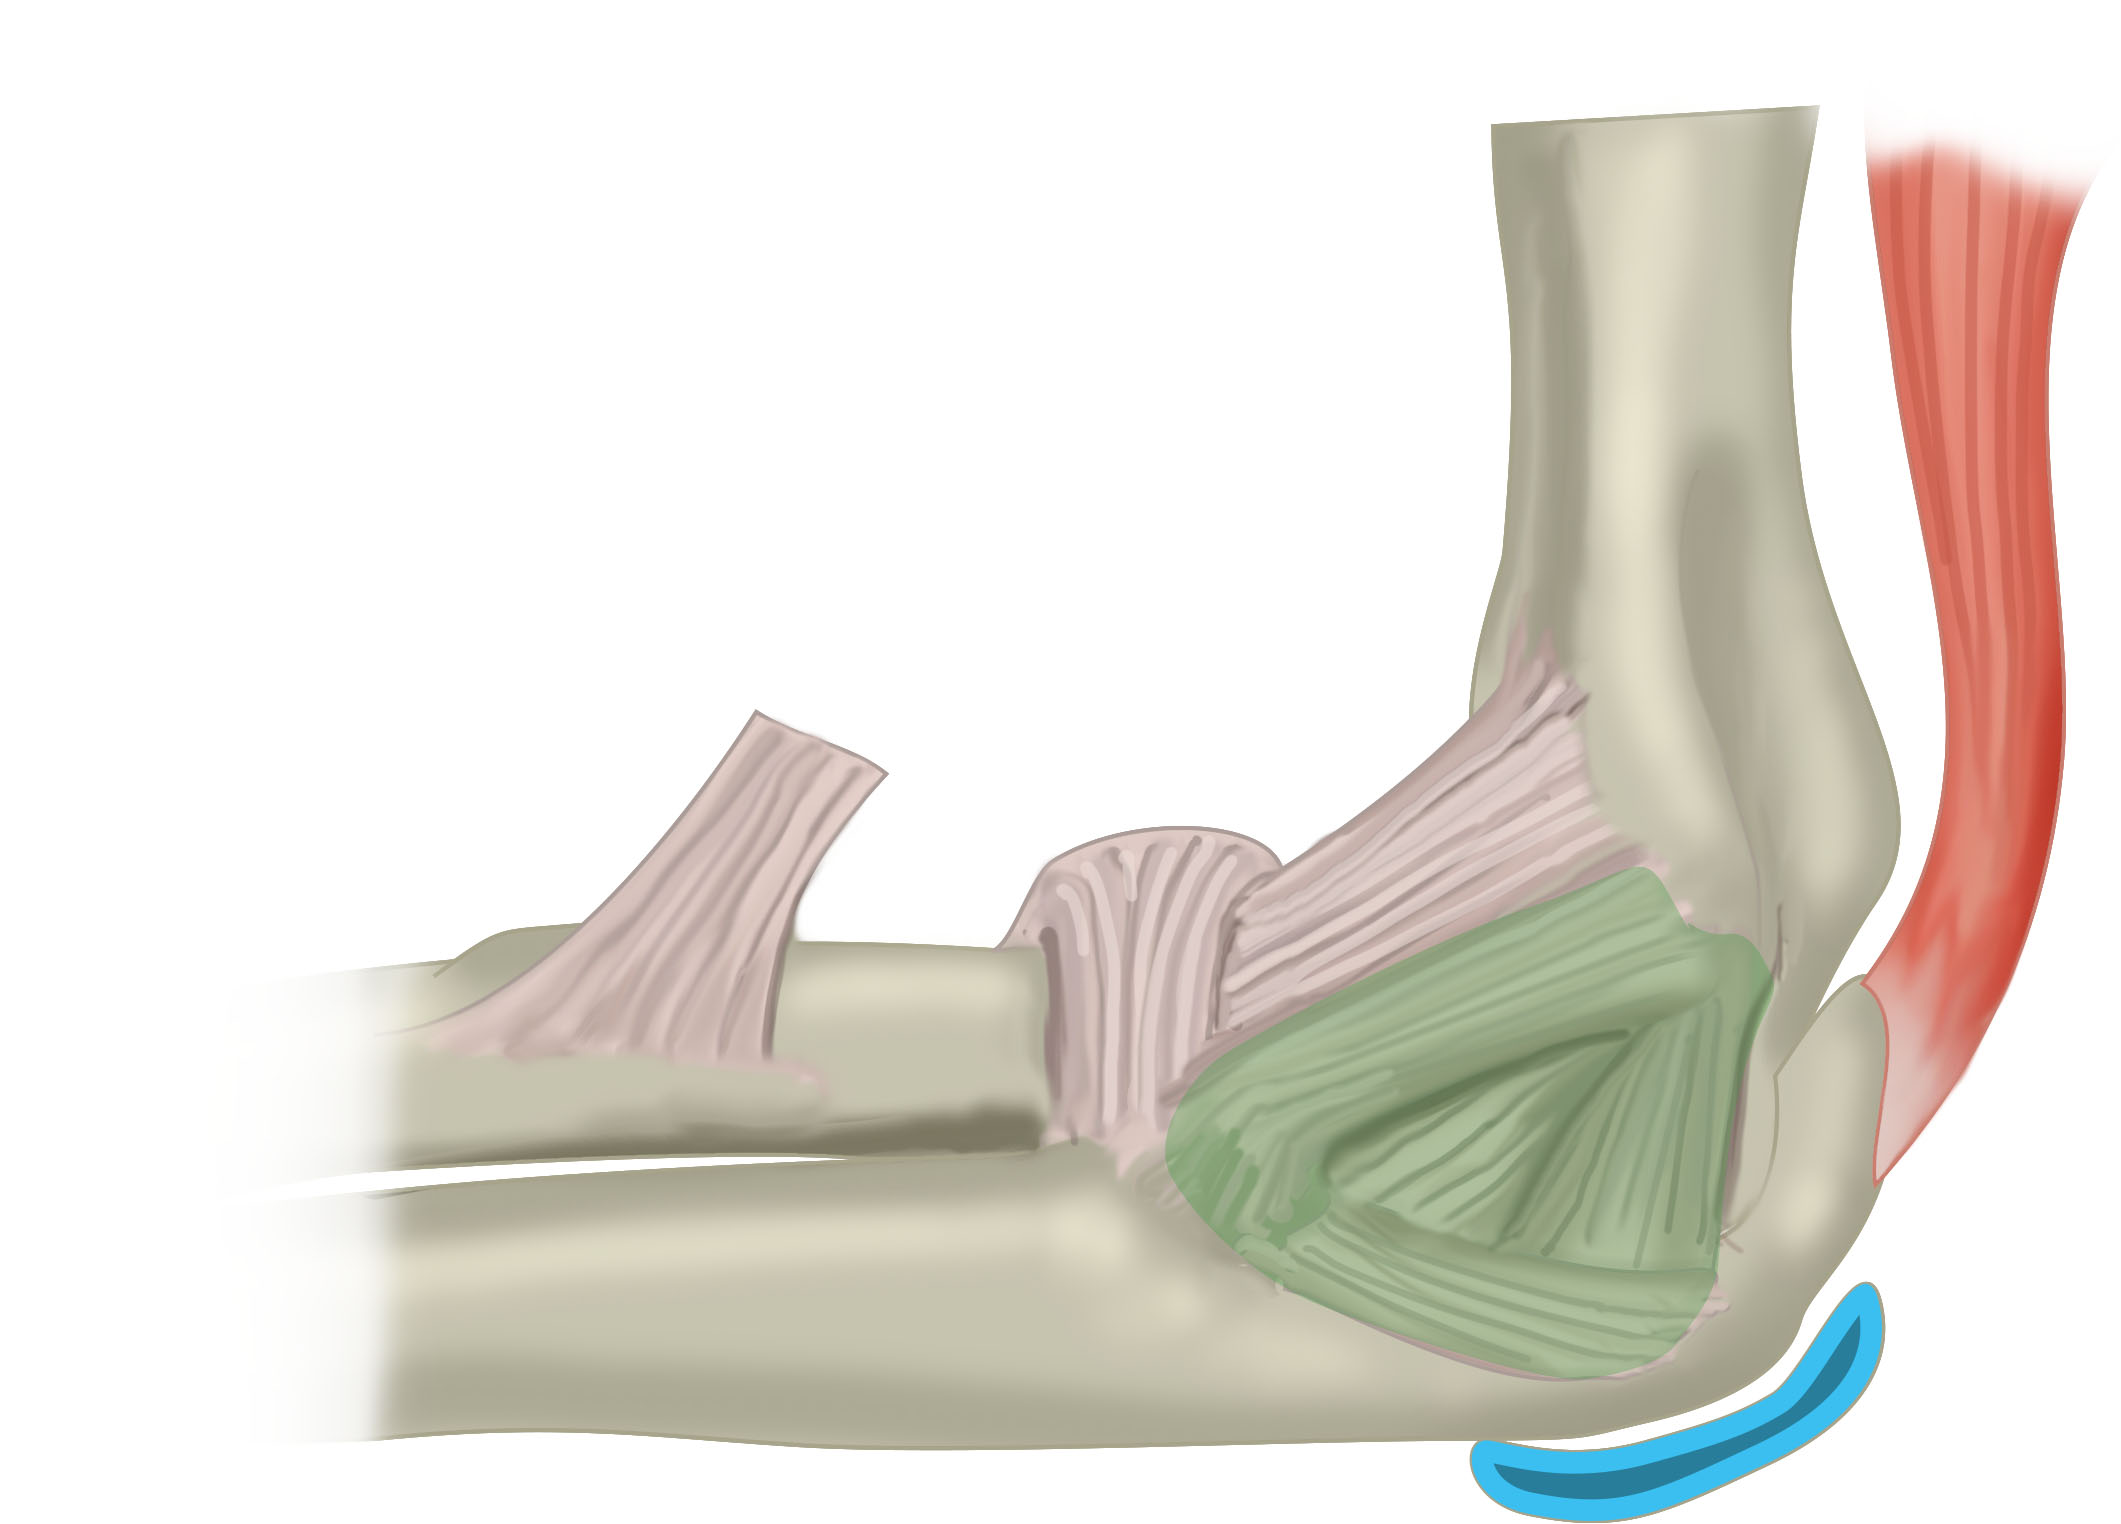 Slagter - Drawing Ulnar nerve compression around the elbow - Dutch labels